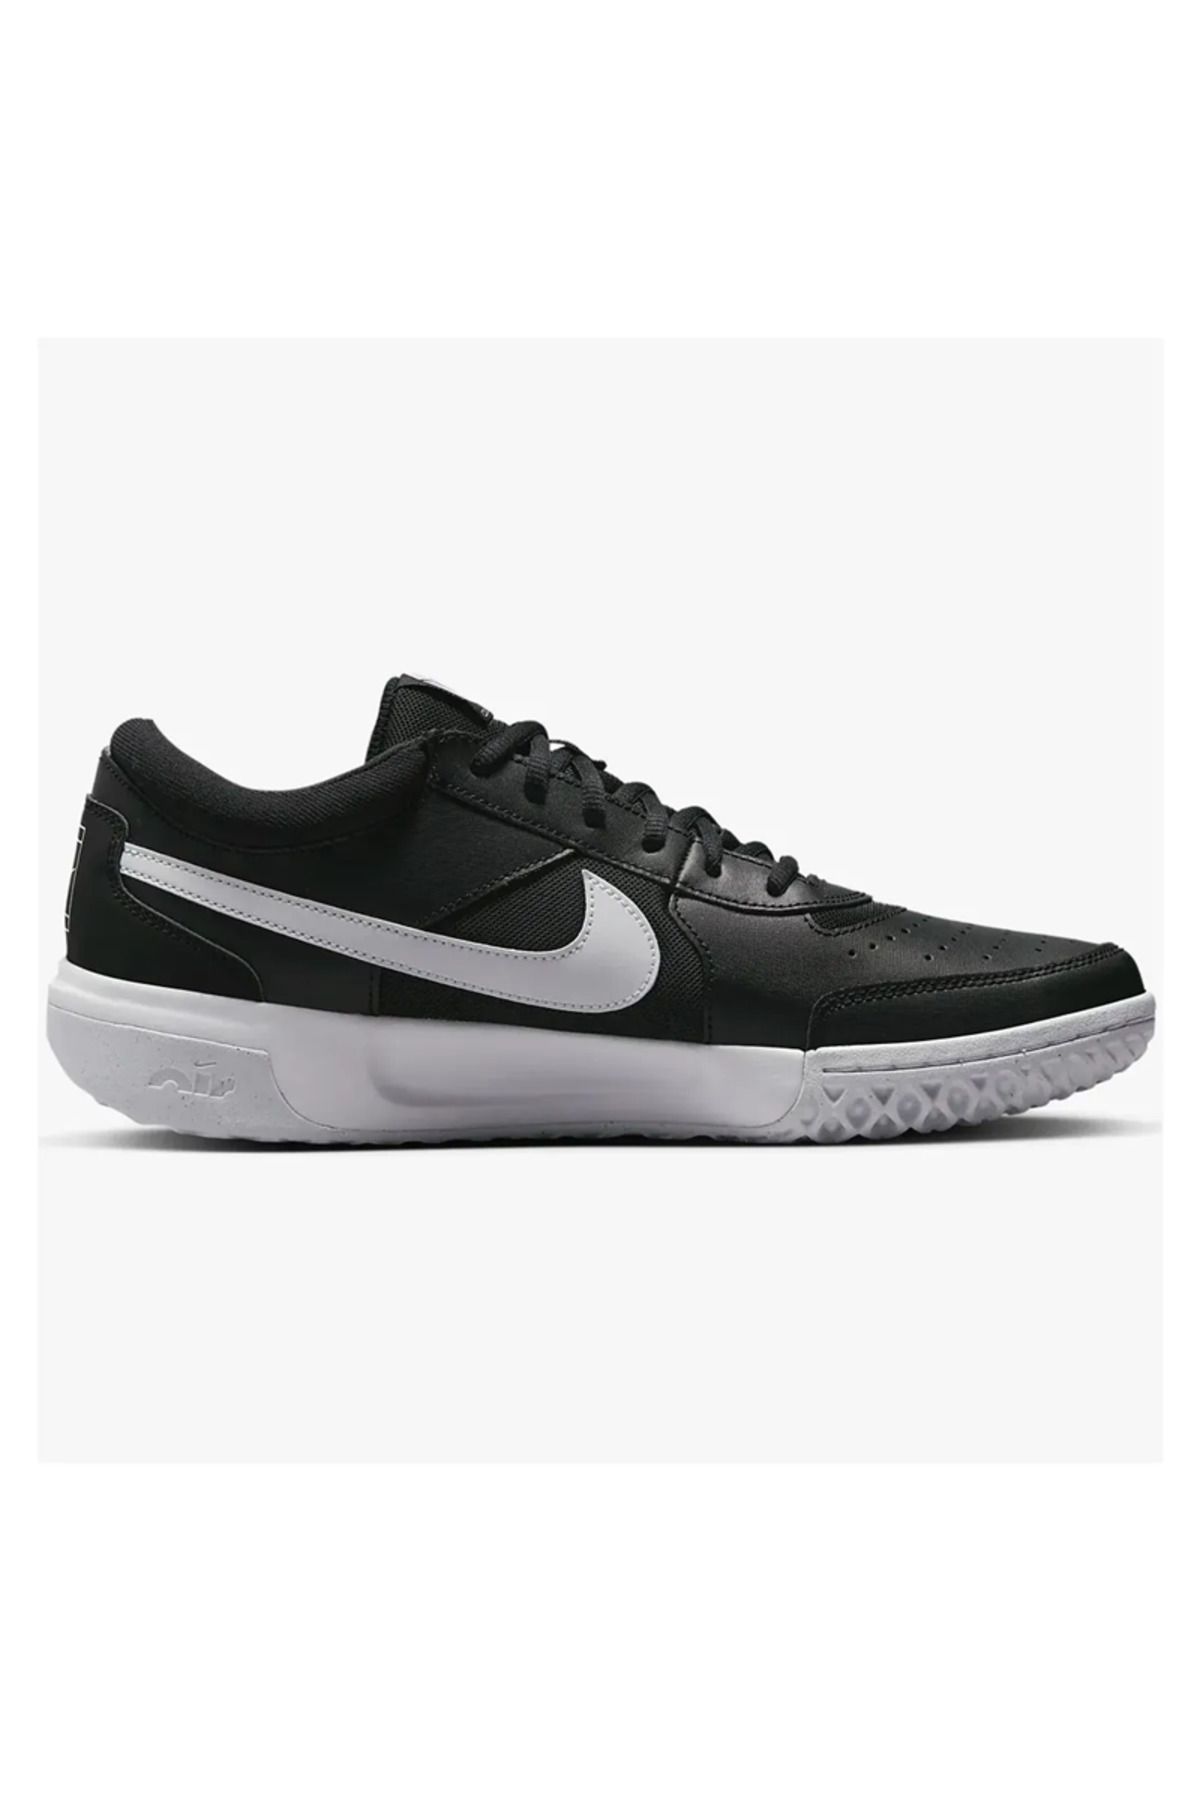 Nike NikeCourt Air Zoom Lite 3 Men's Tennis Shoes